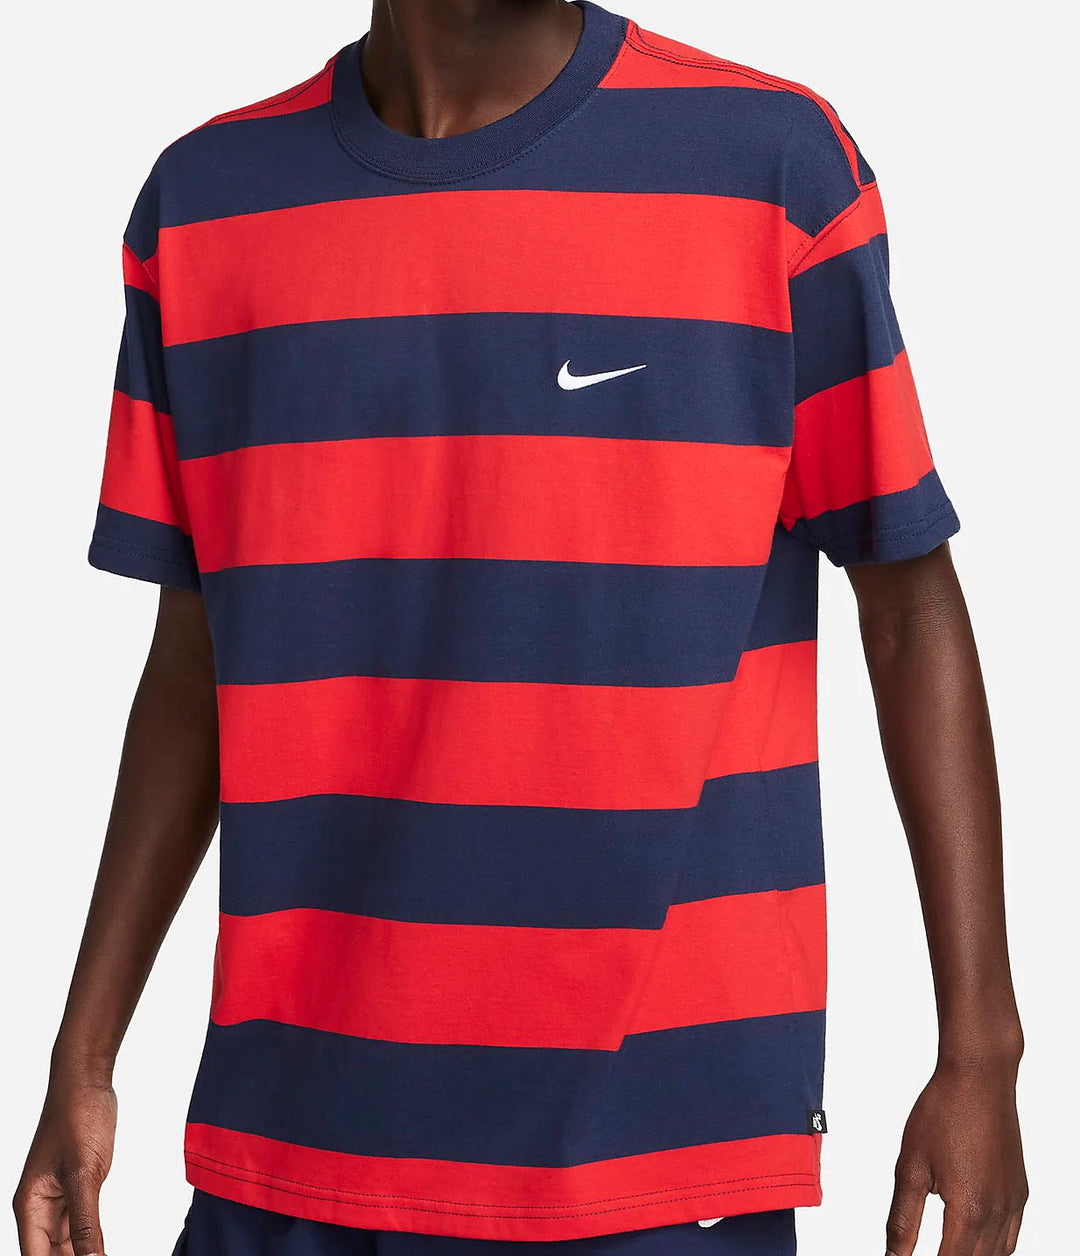 Camiseta Nike SB Striped Tee Red Navy - Store Pesadao